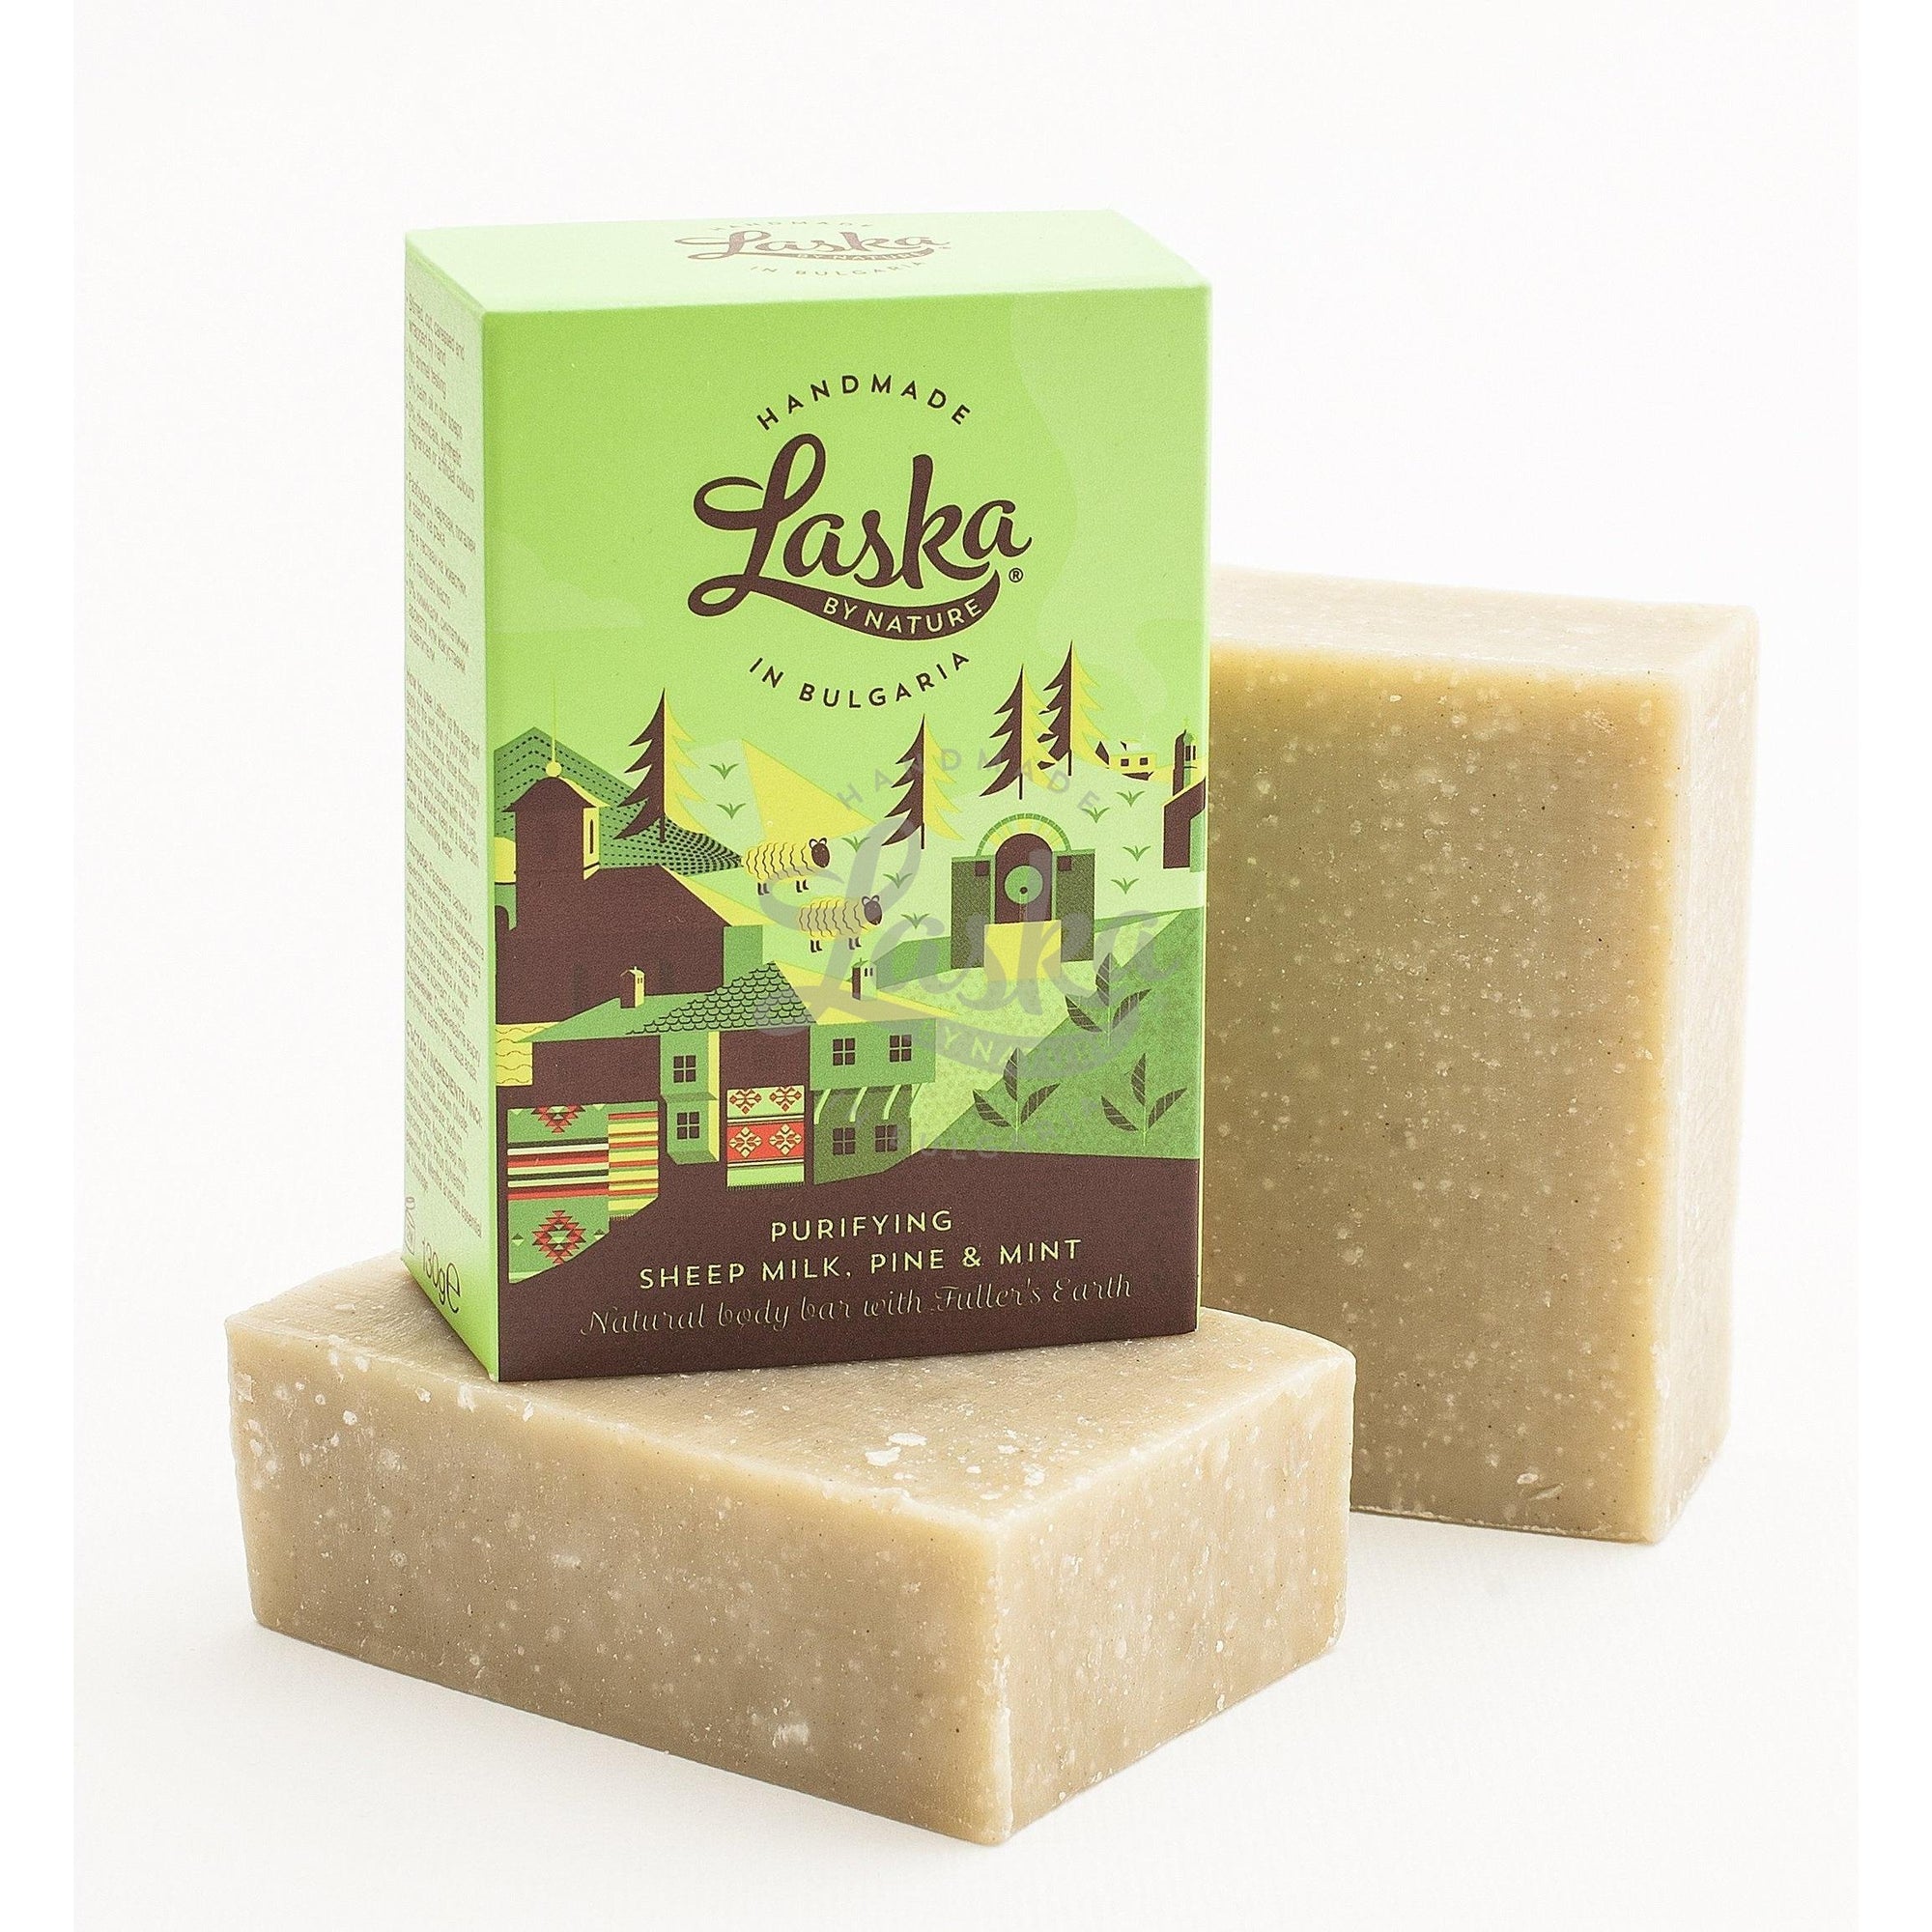 Bulgarian sheep milk, pine & mint natural soap with Fuller's Earth-Natural soap-Laska by nature